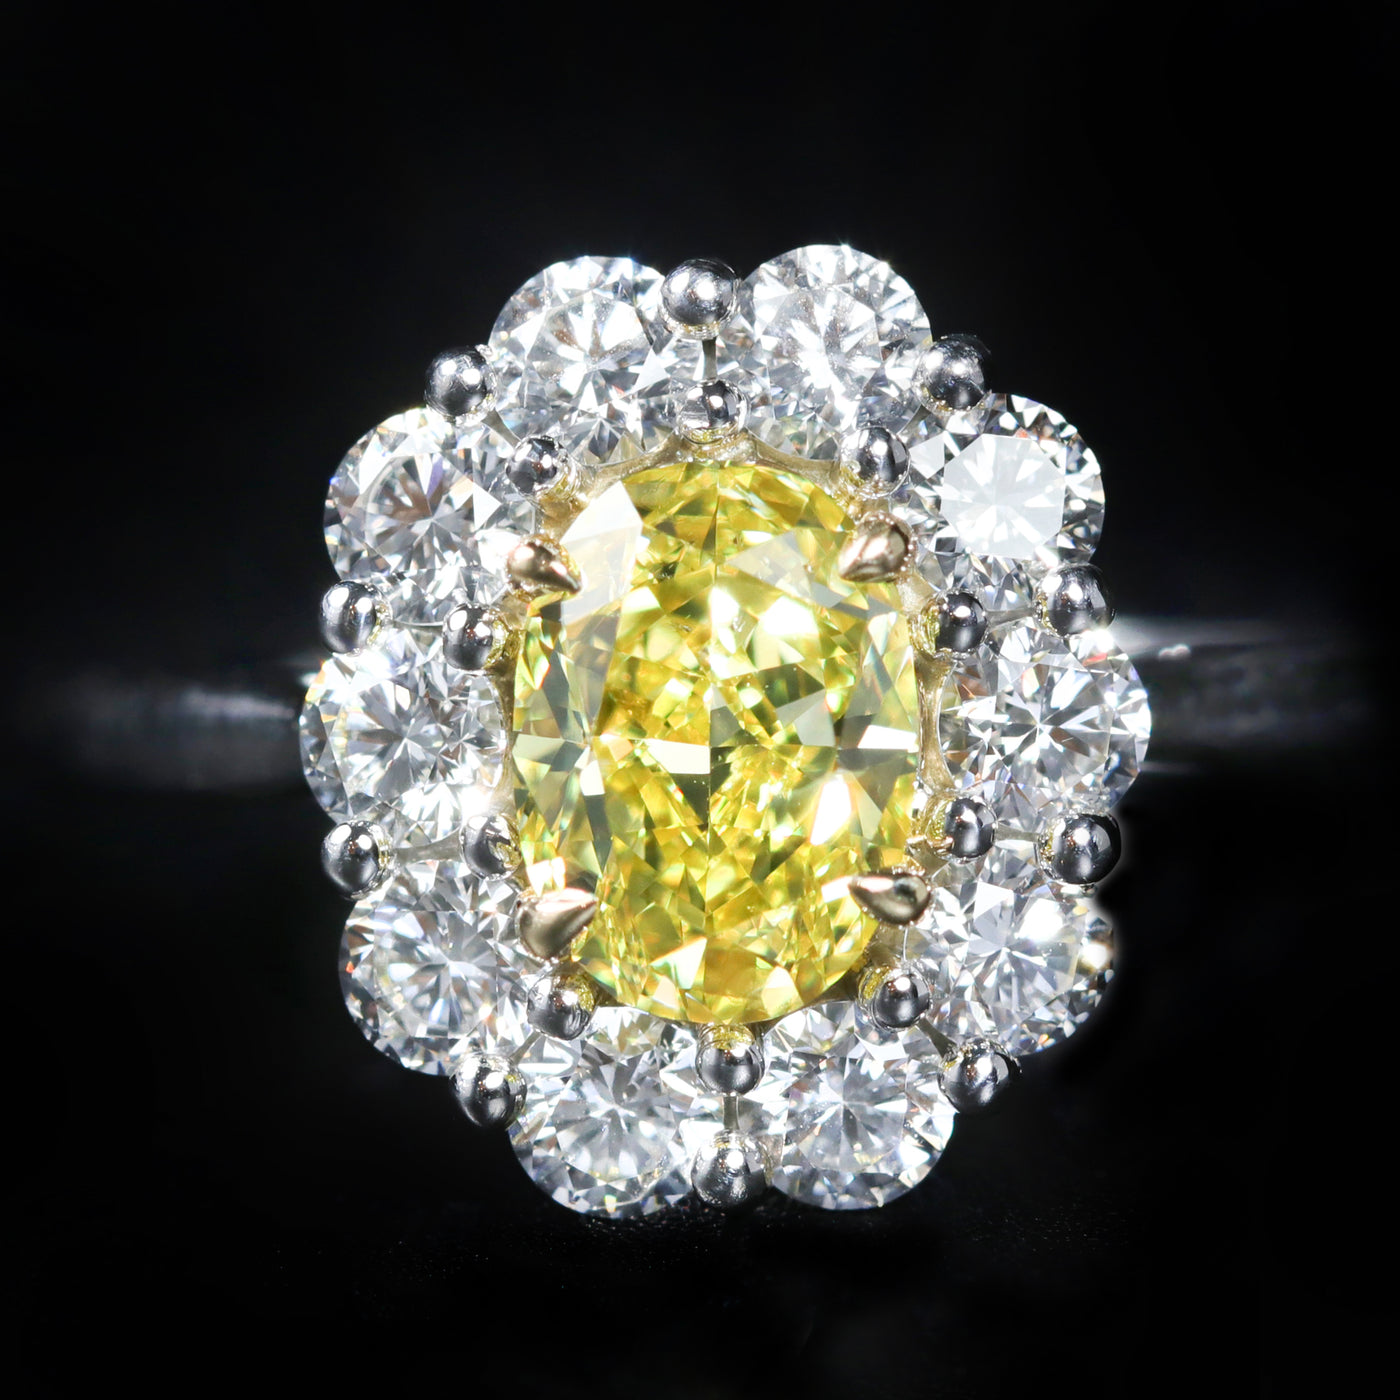 LV Diamonds V Ring, Platinum - Jewelry - Categories